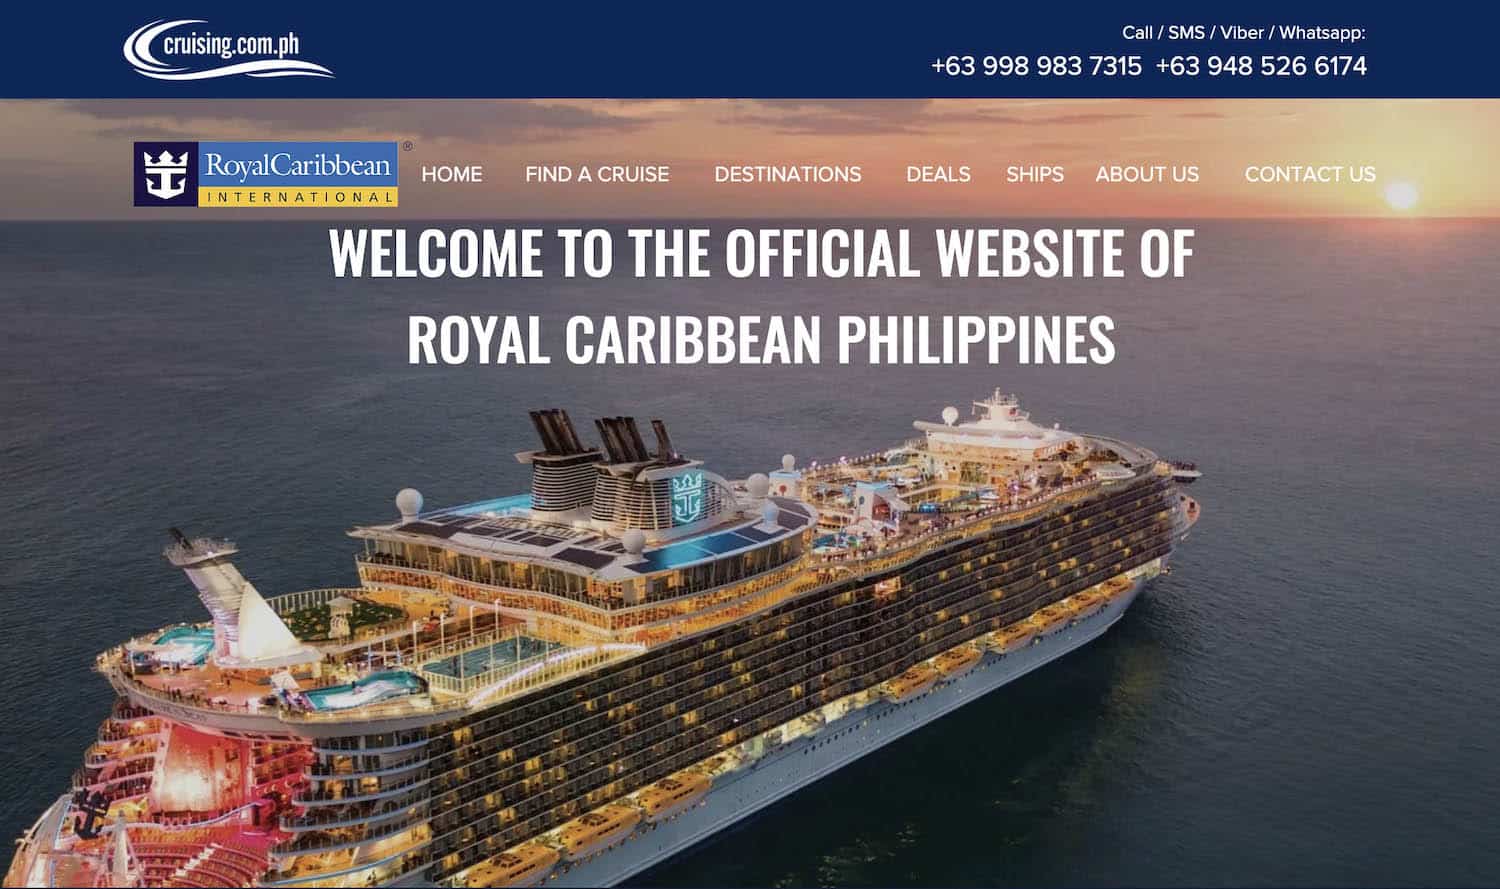 Royal Caribbean Philippines Website